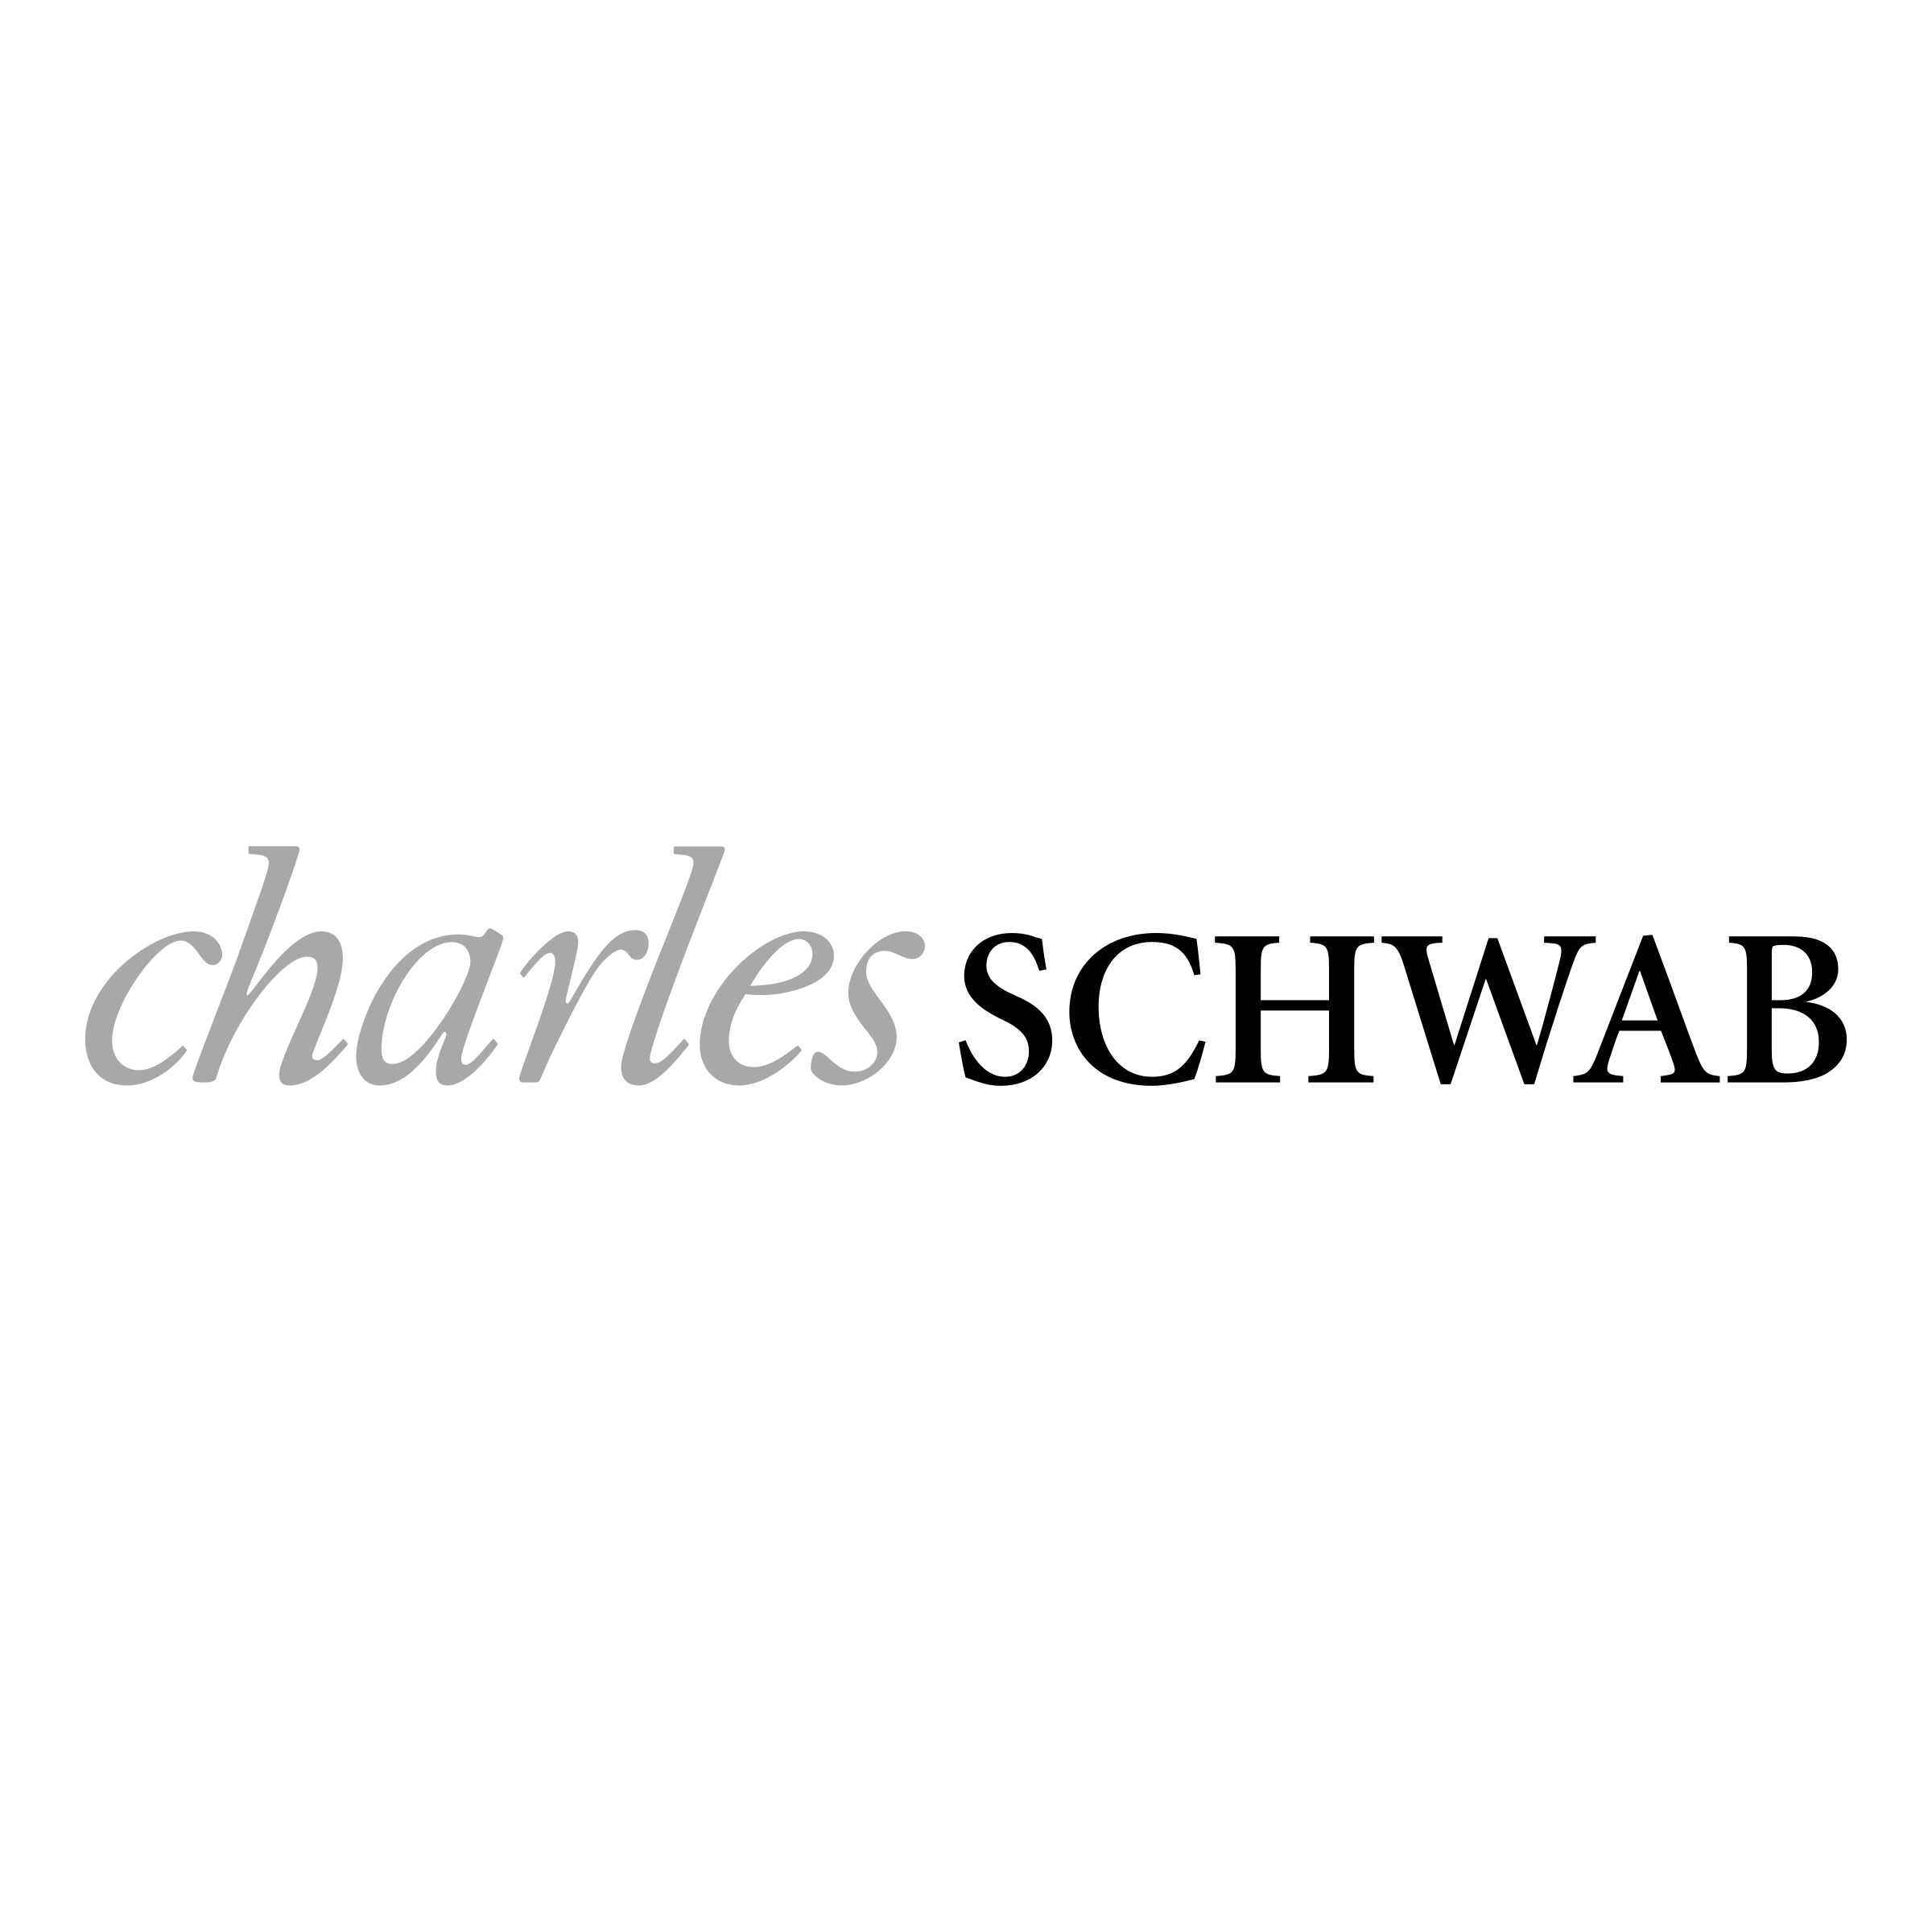 Schwab Logo - Charles Schwab Logo PNG Transparent & SVG Vector - Freebie Supply